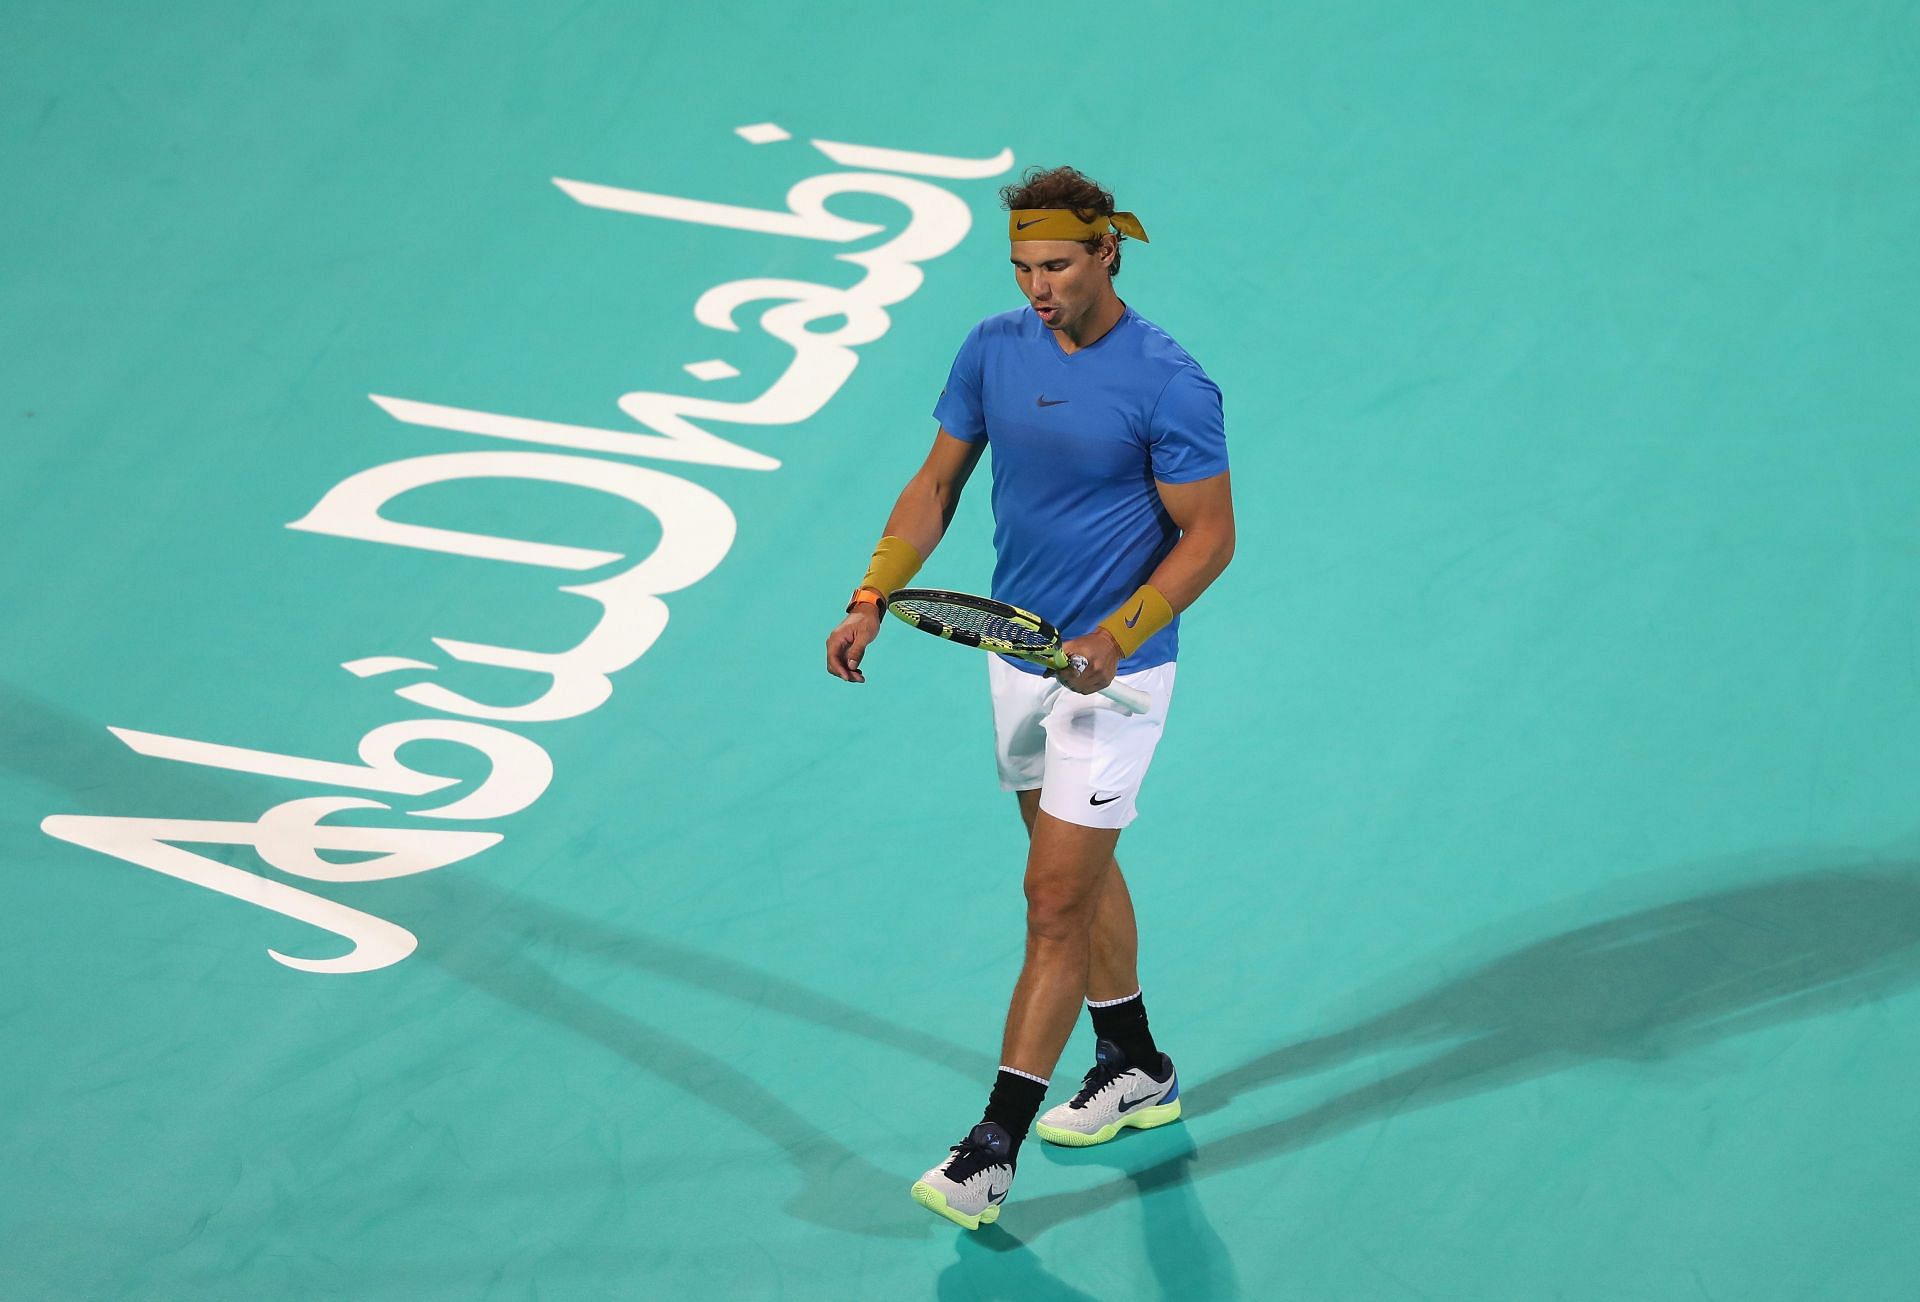 Rafael Nadal will defend his Mubadala World Tennis Championship title next week